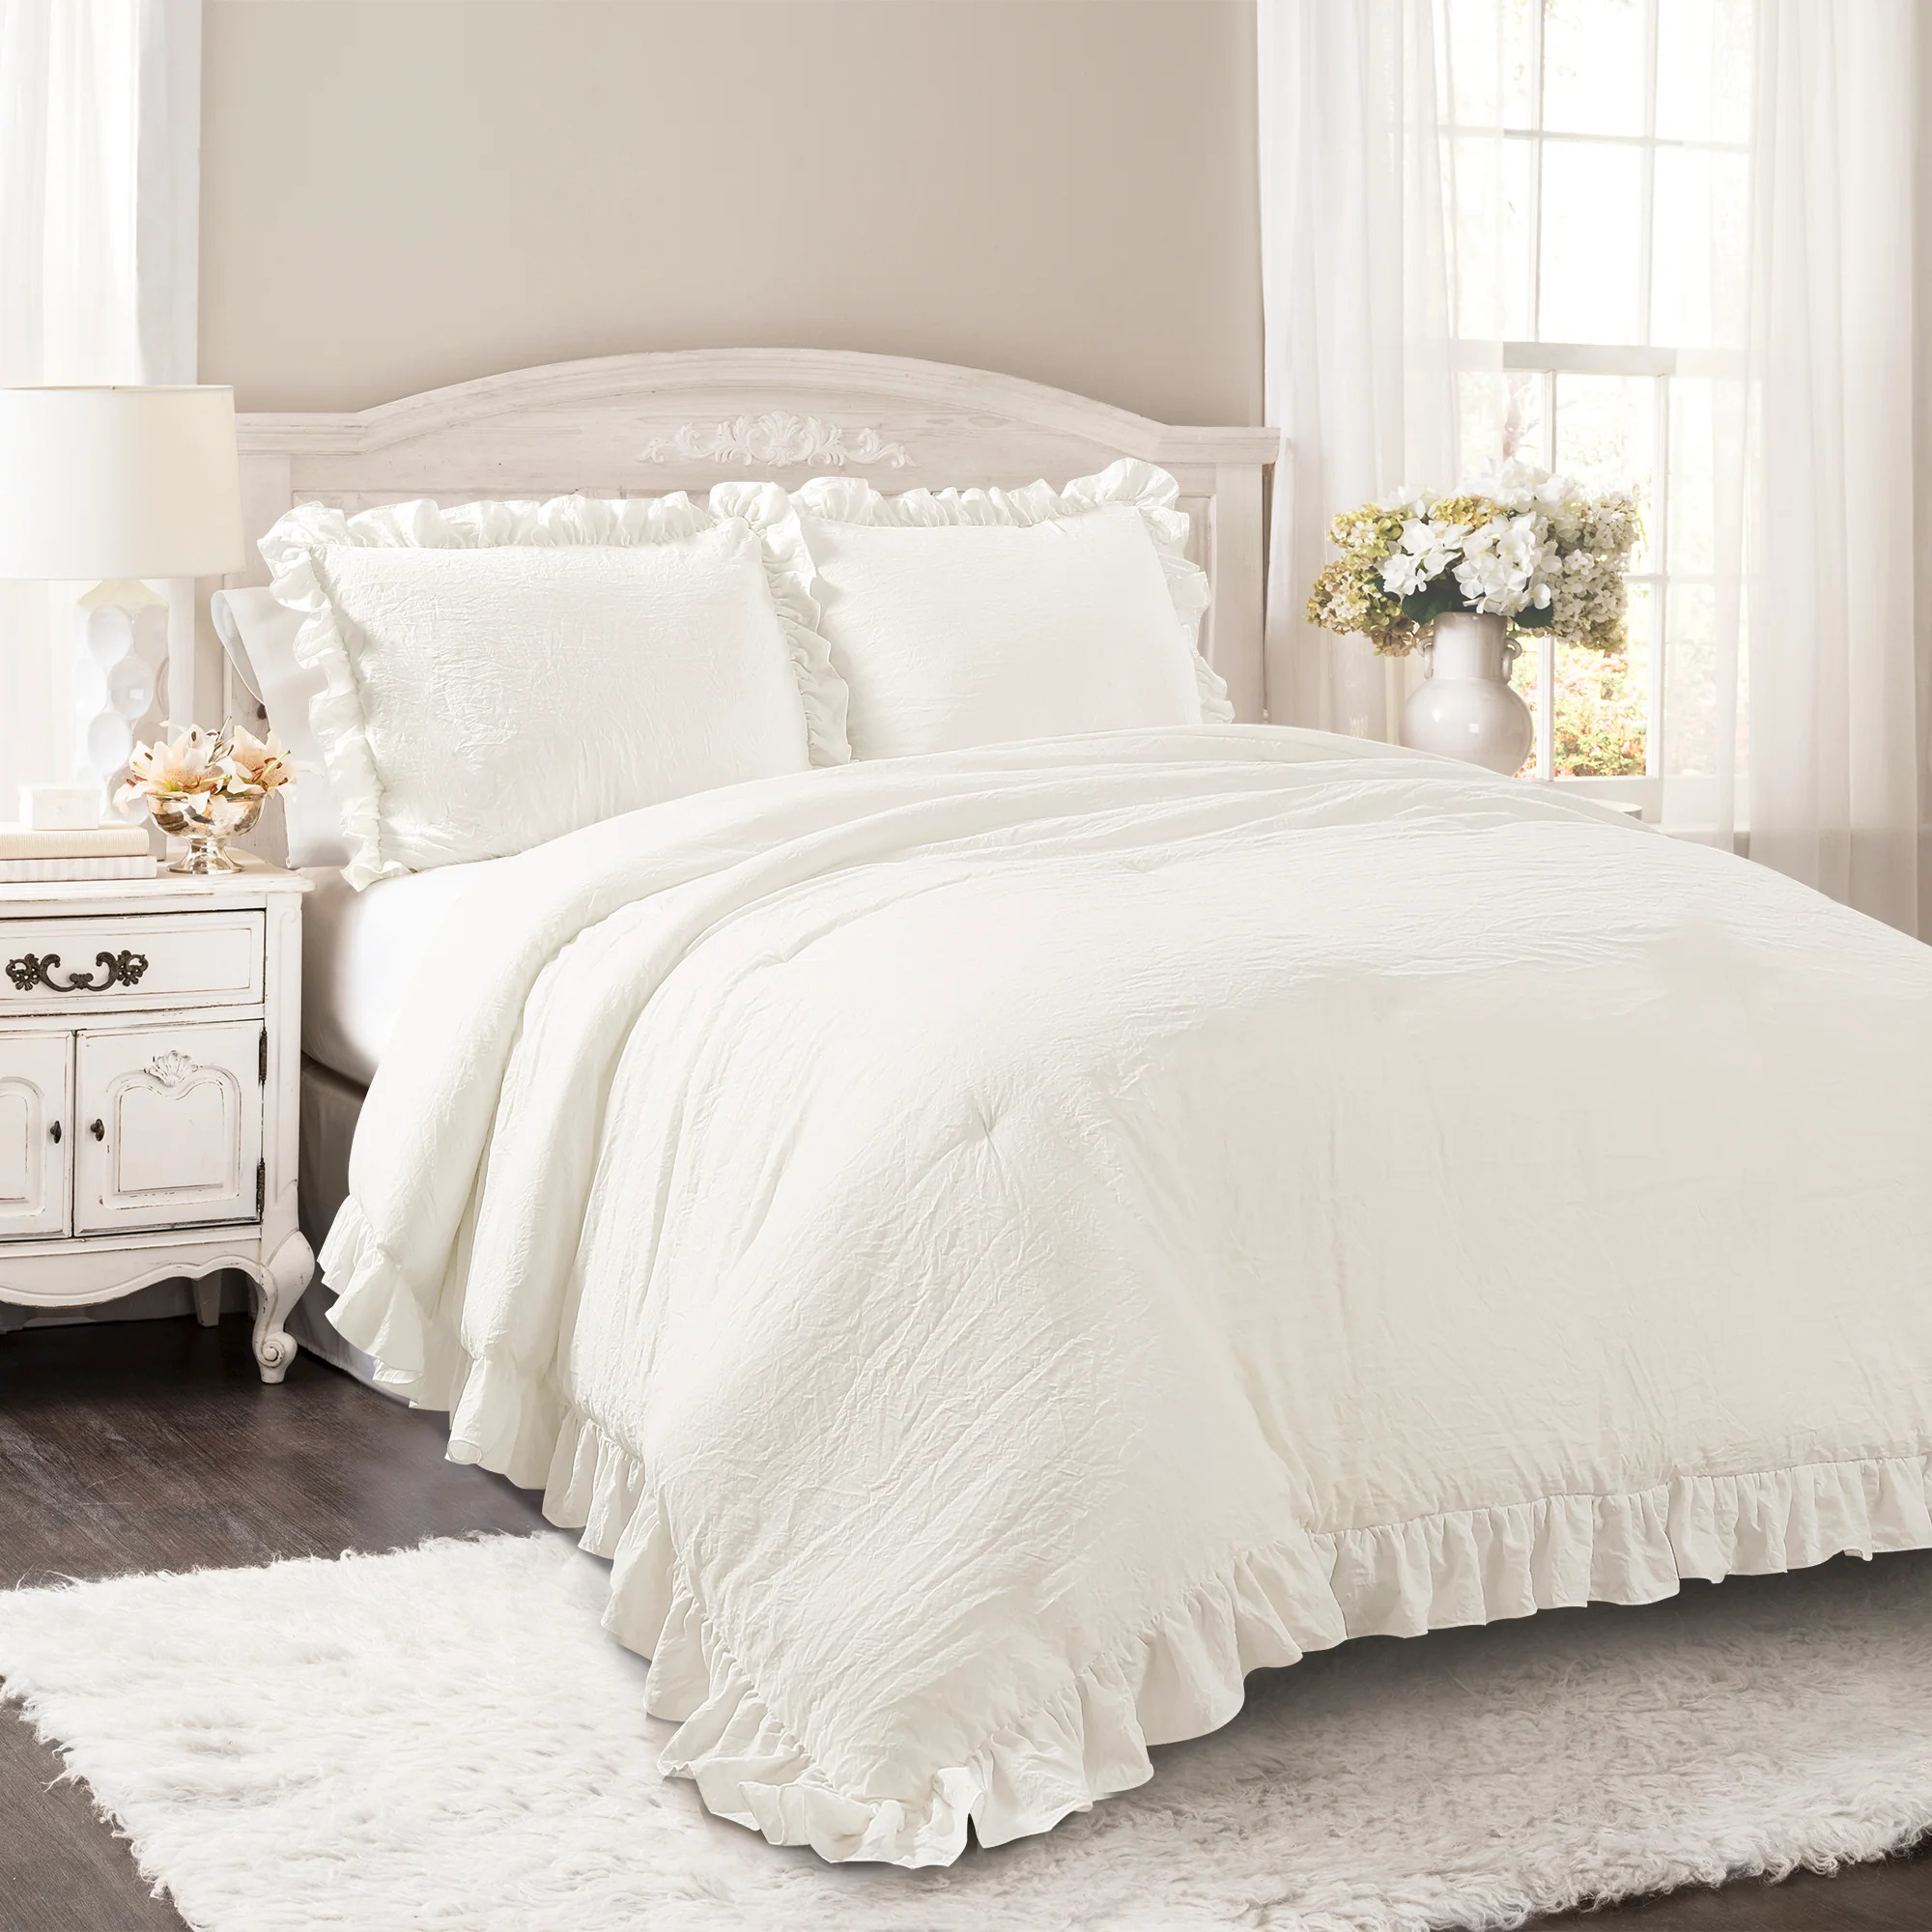 Lush Decor 3 Piece Comforter Sets, King with Pillow Shams - image 1 of 10